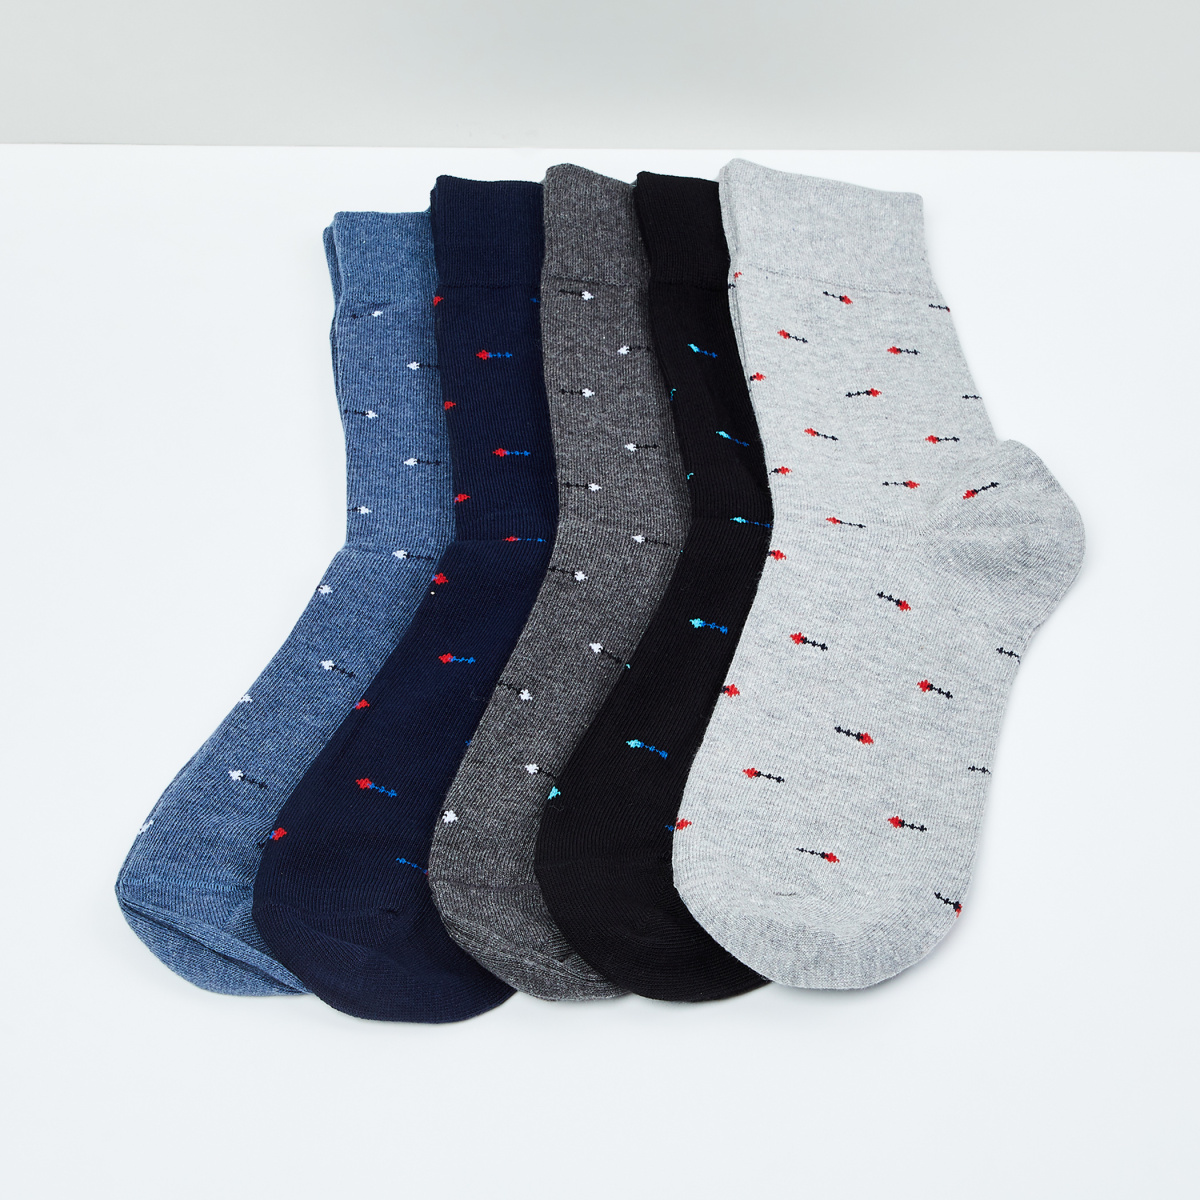 MAX Patterned Socks - Set of 5